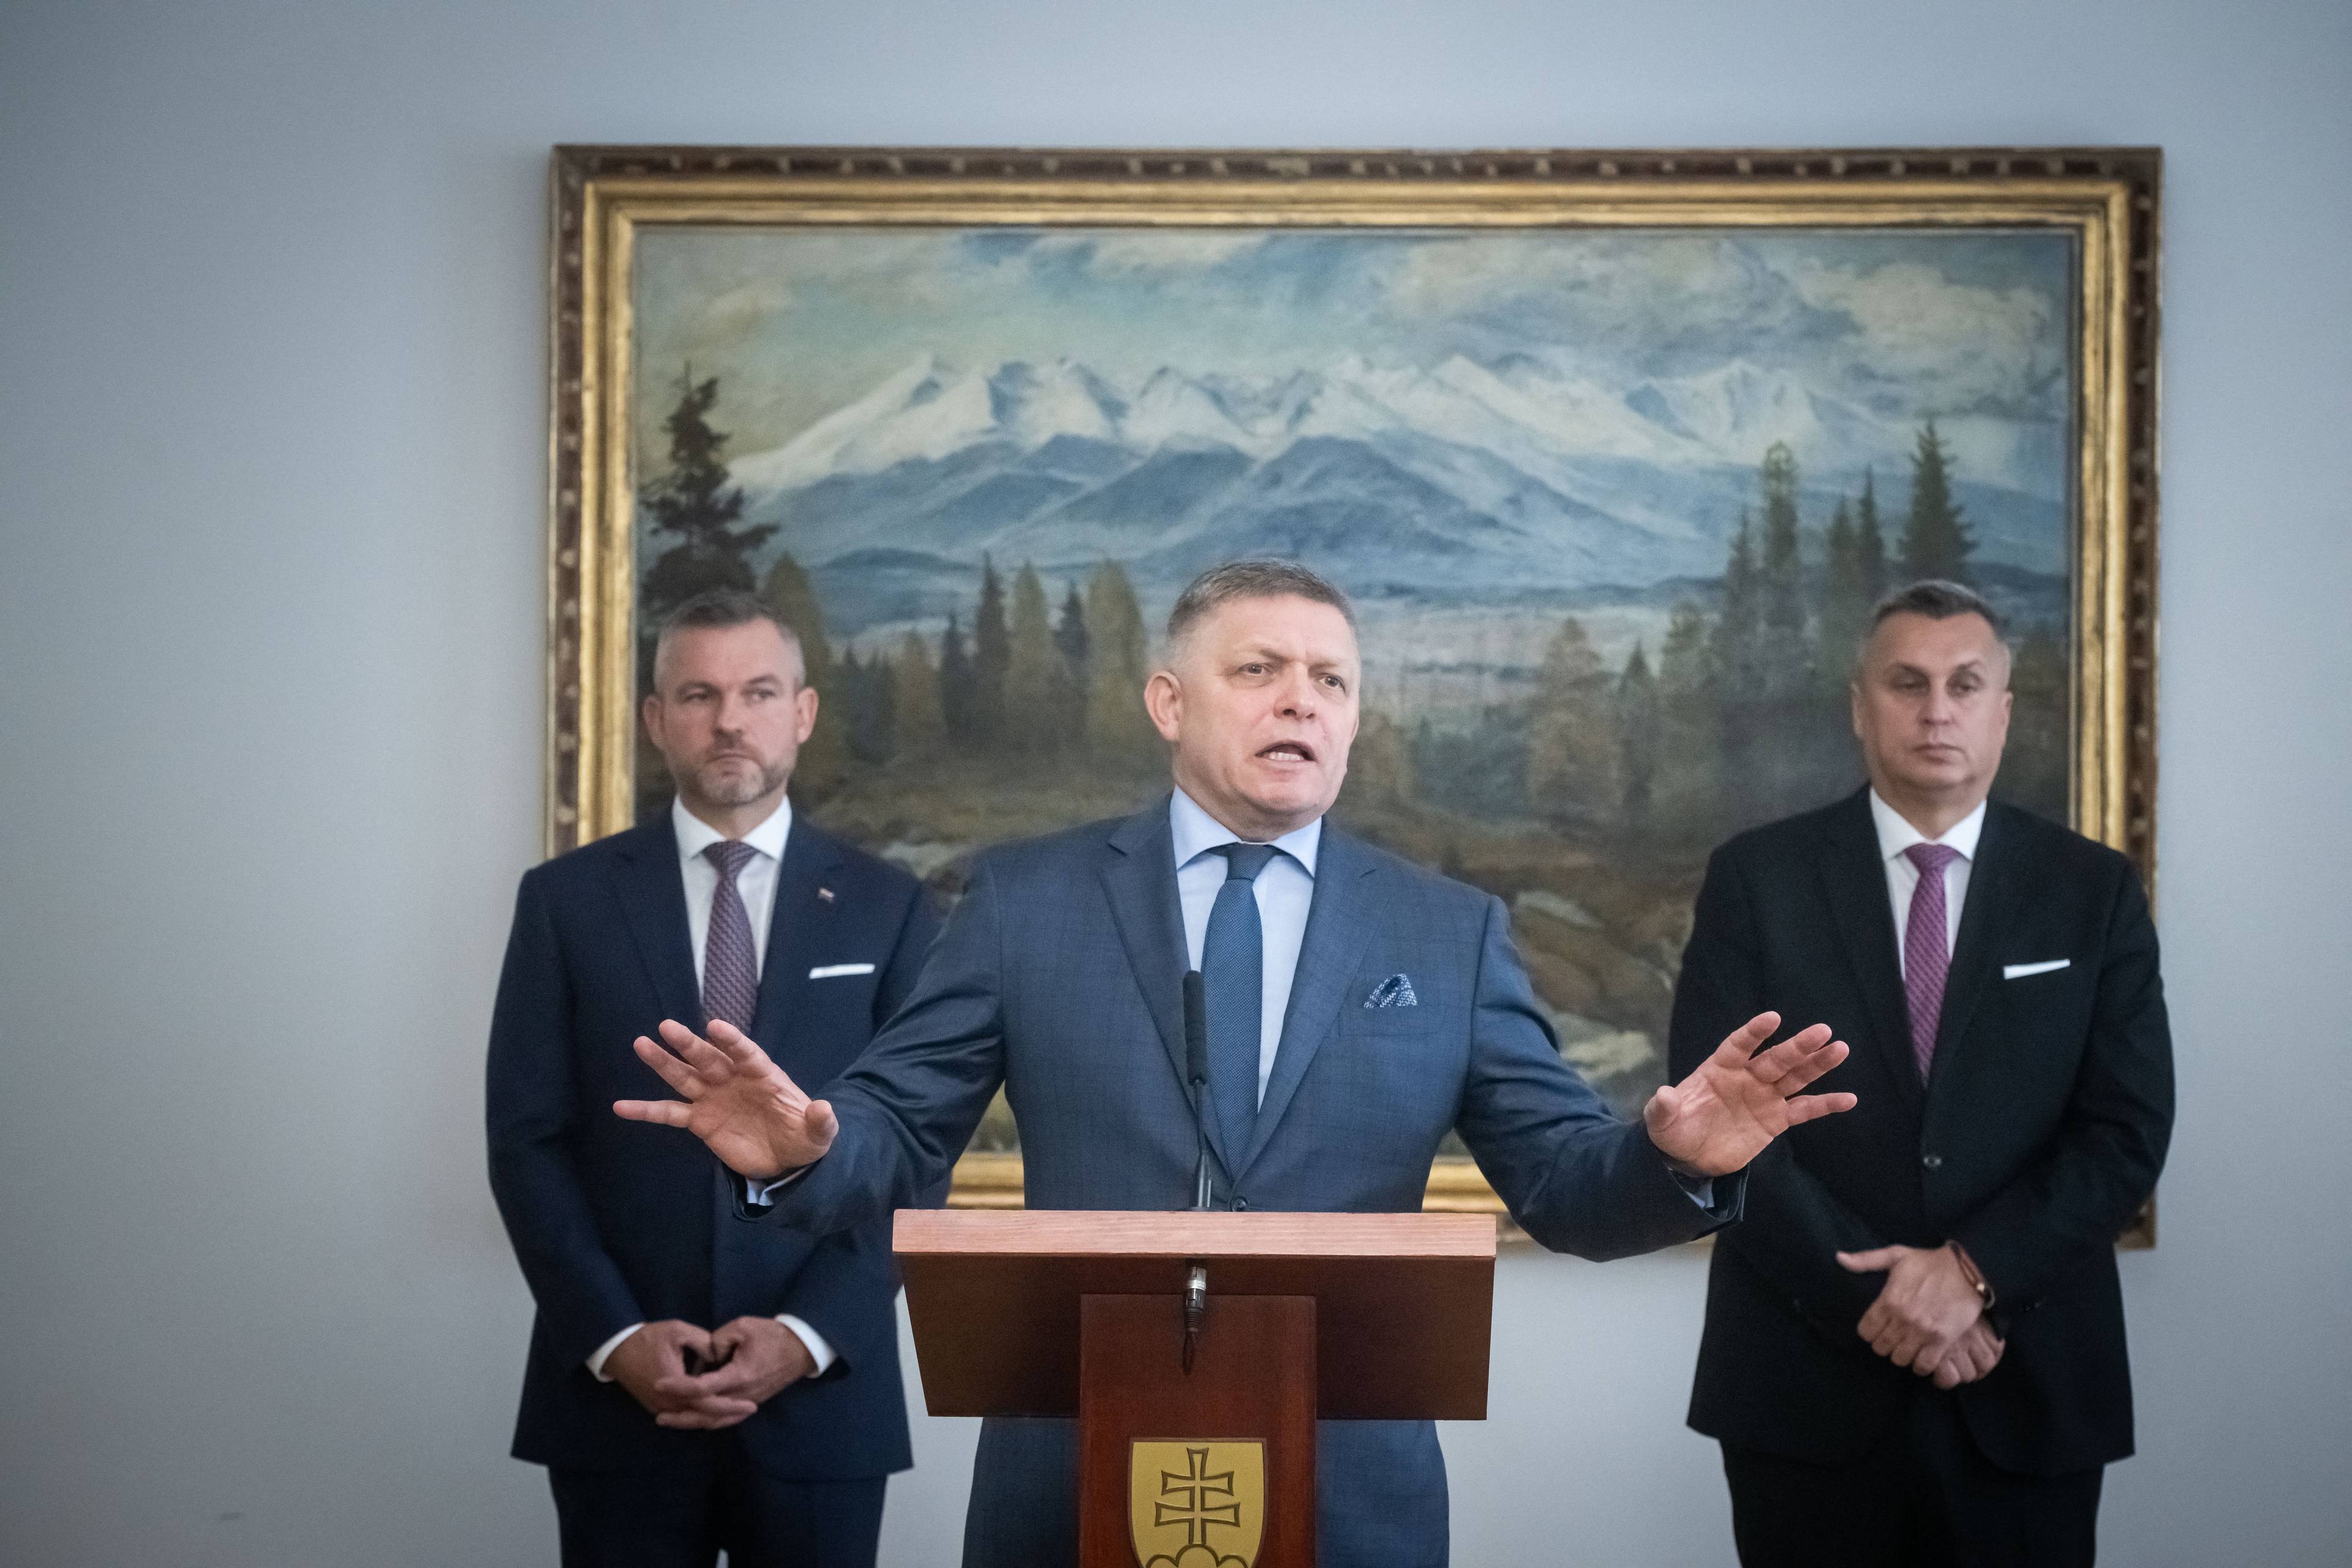 SLOVAKIA-POLITICS-GOVERNMENT